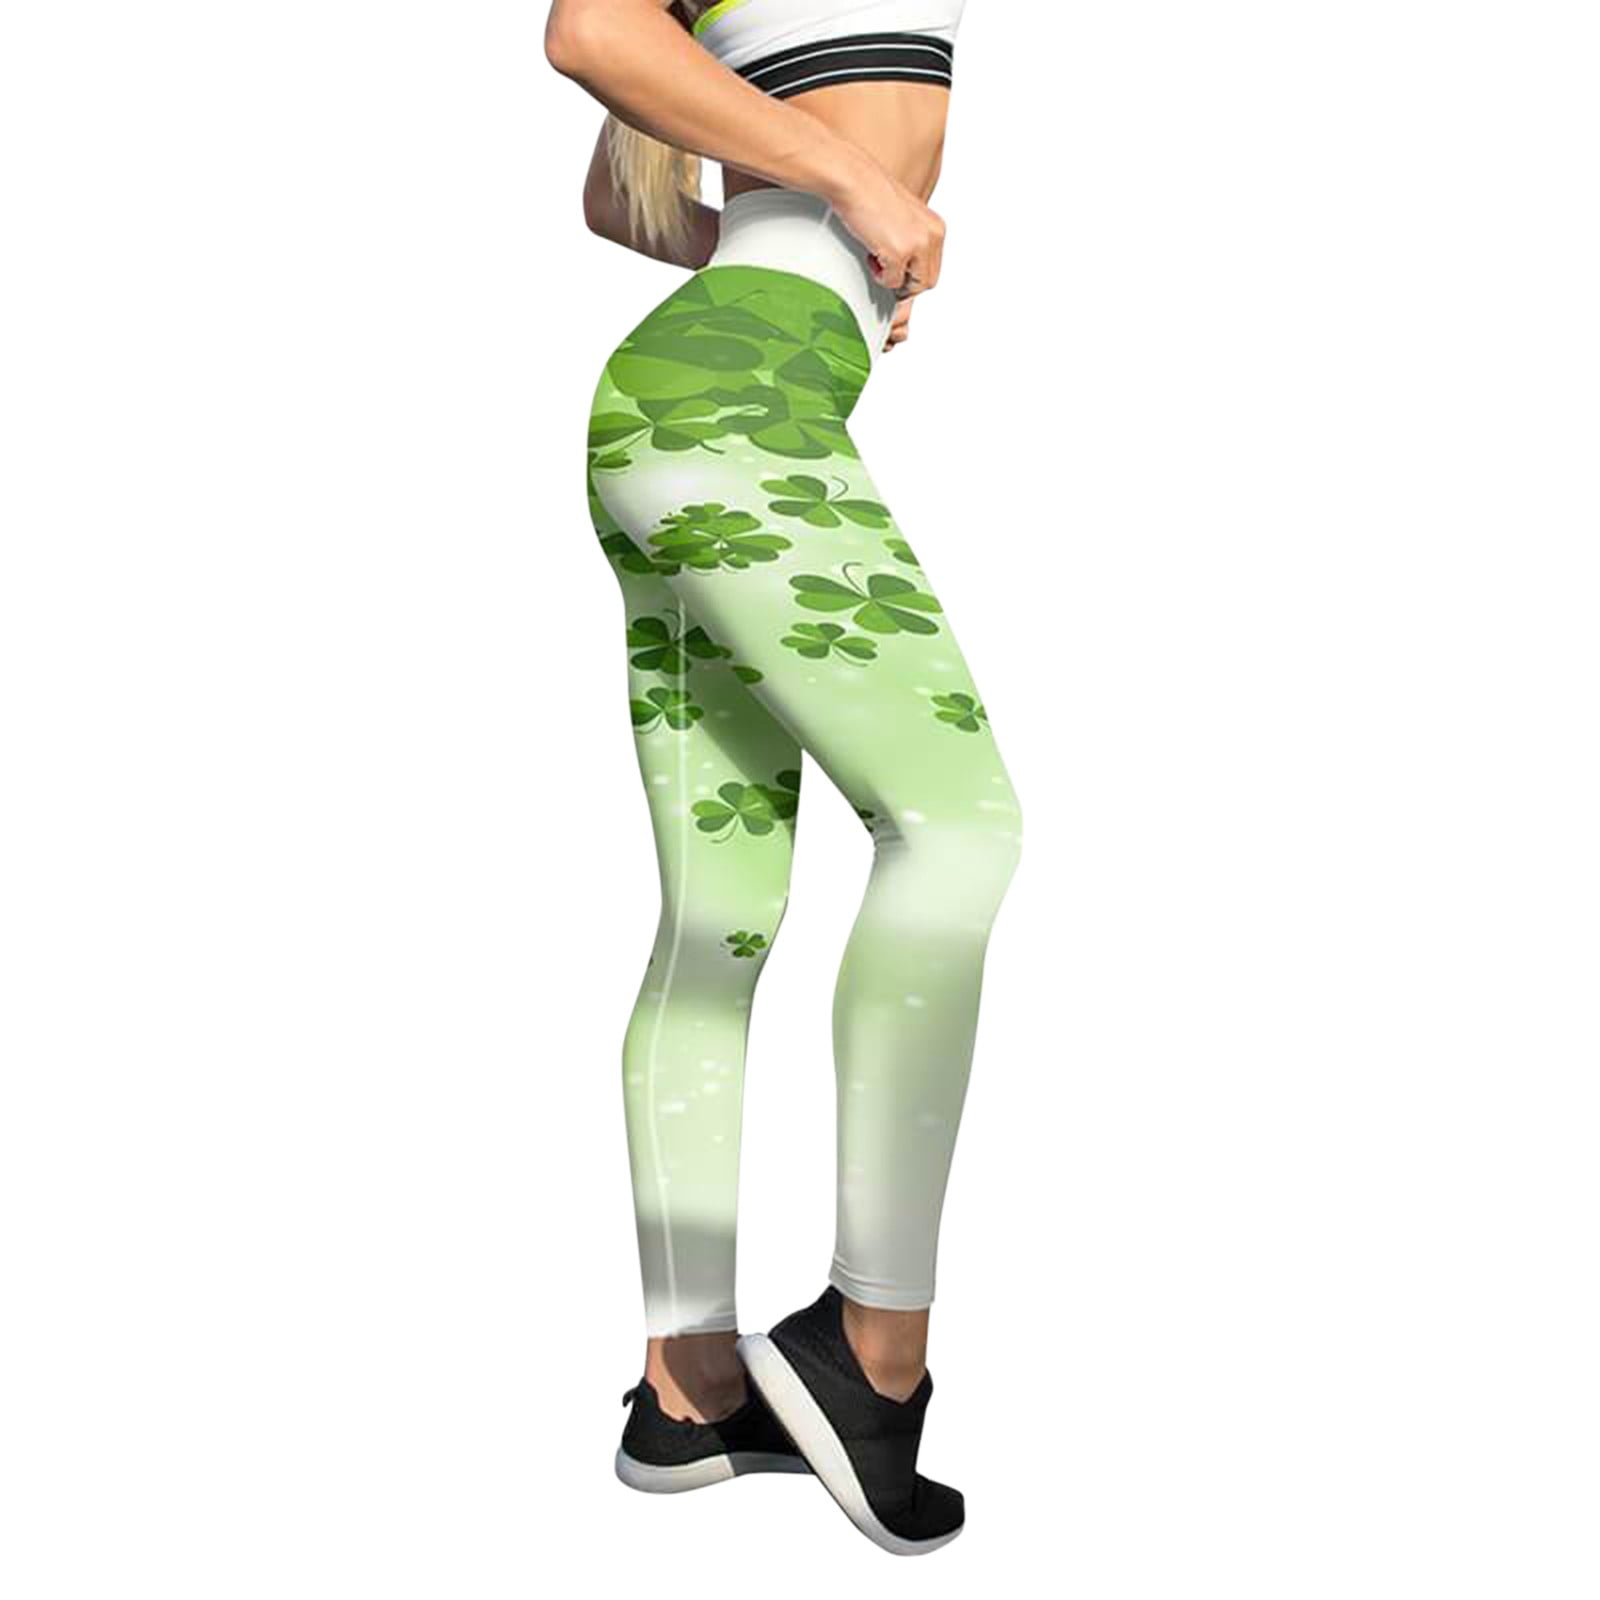 BSDHBS Yoga Clothes for Women Leggings Pilates Pants Green Good